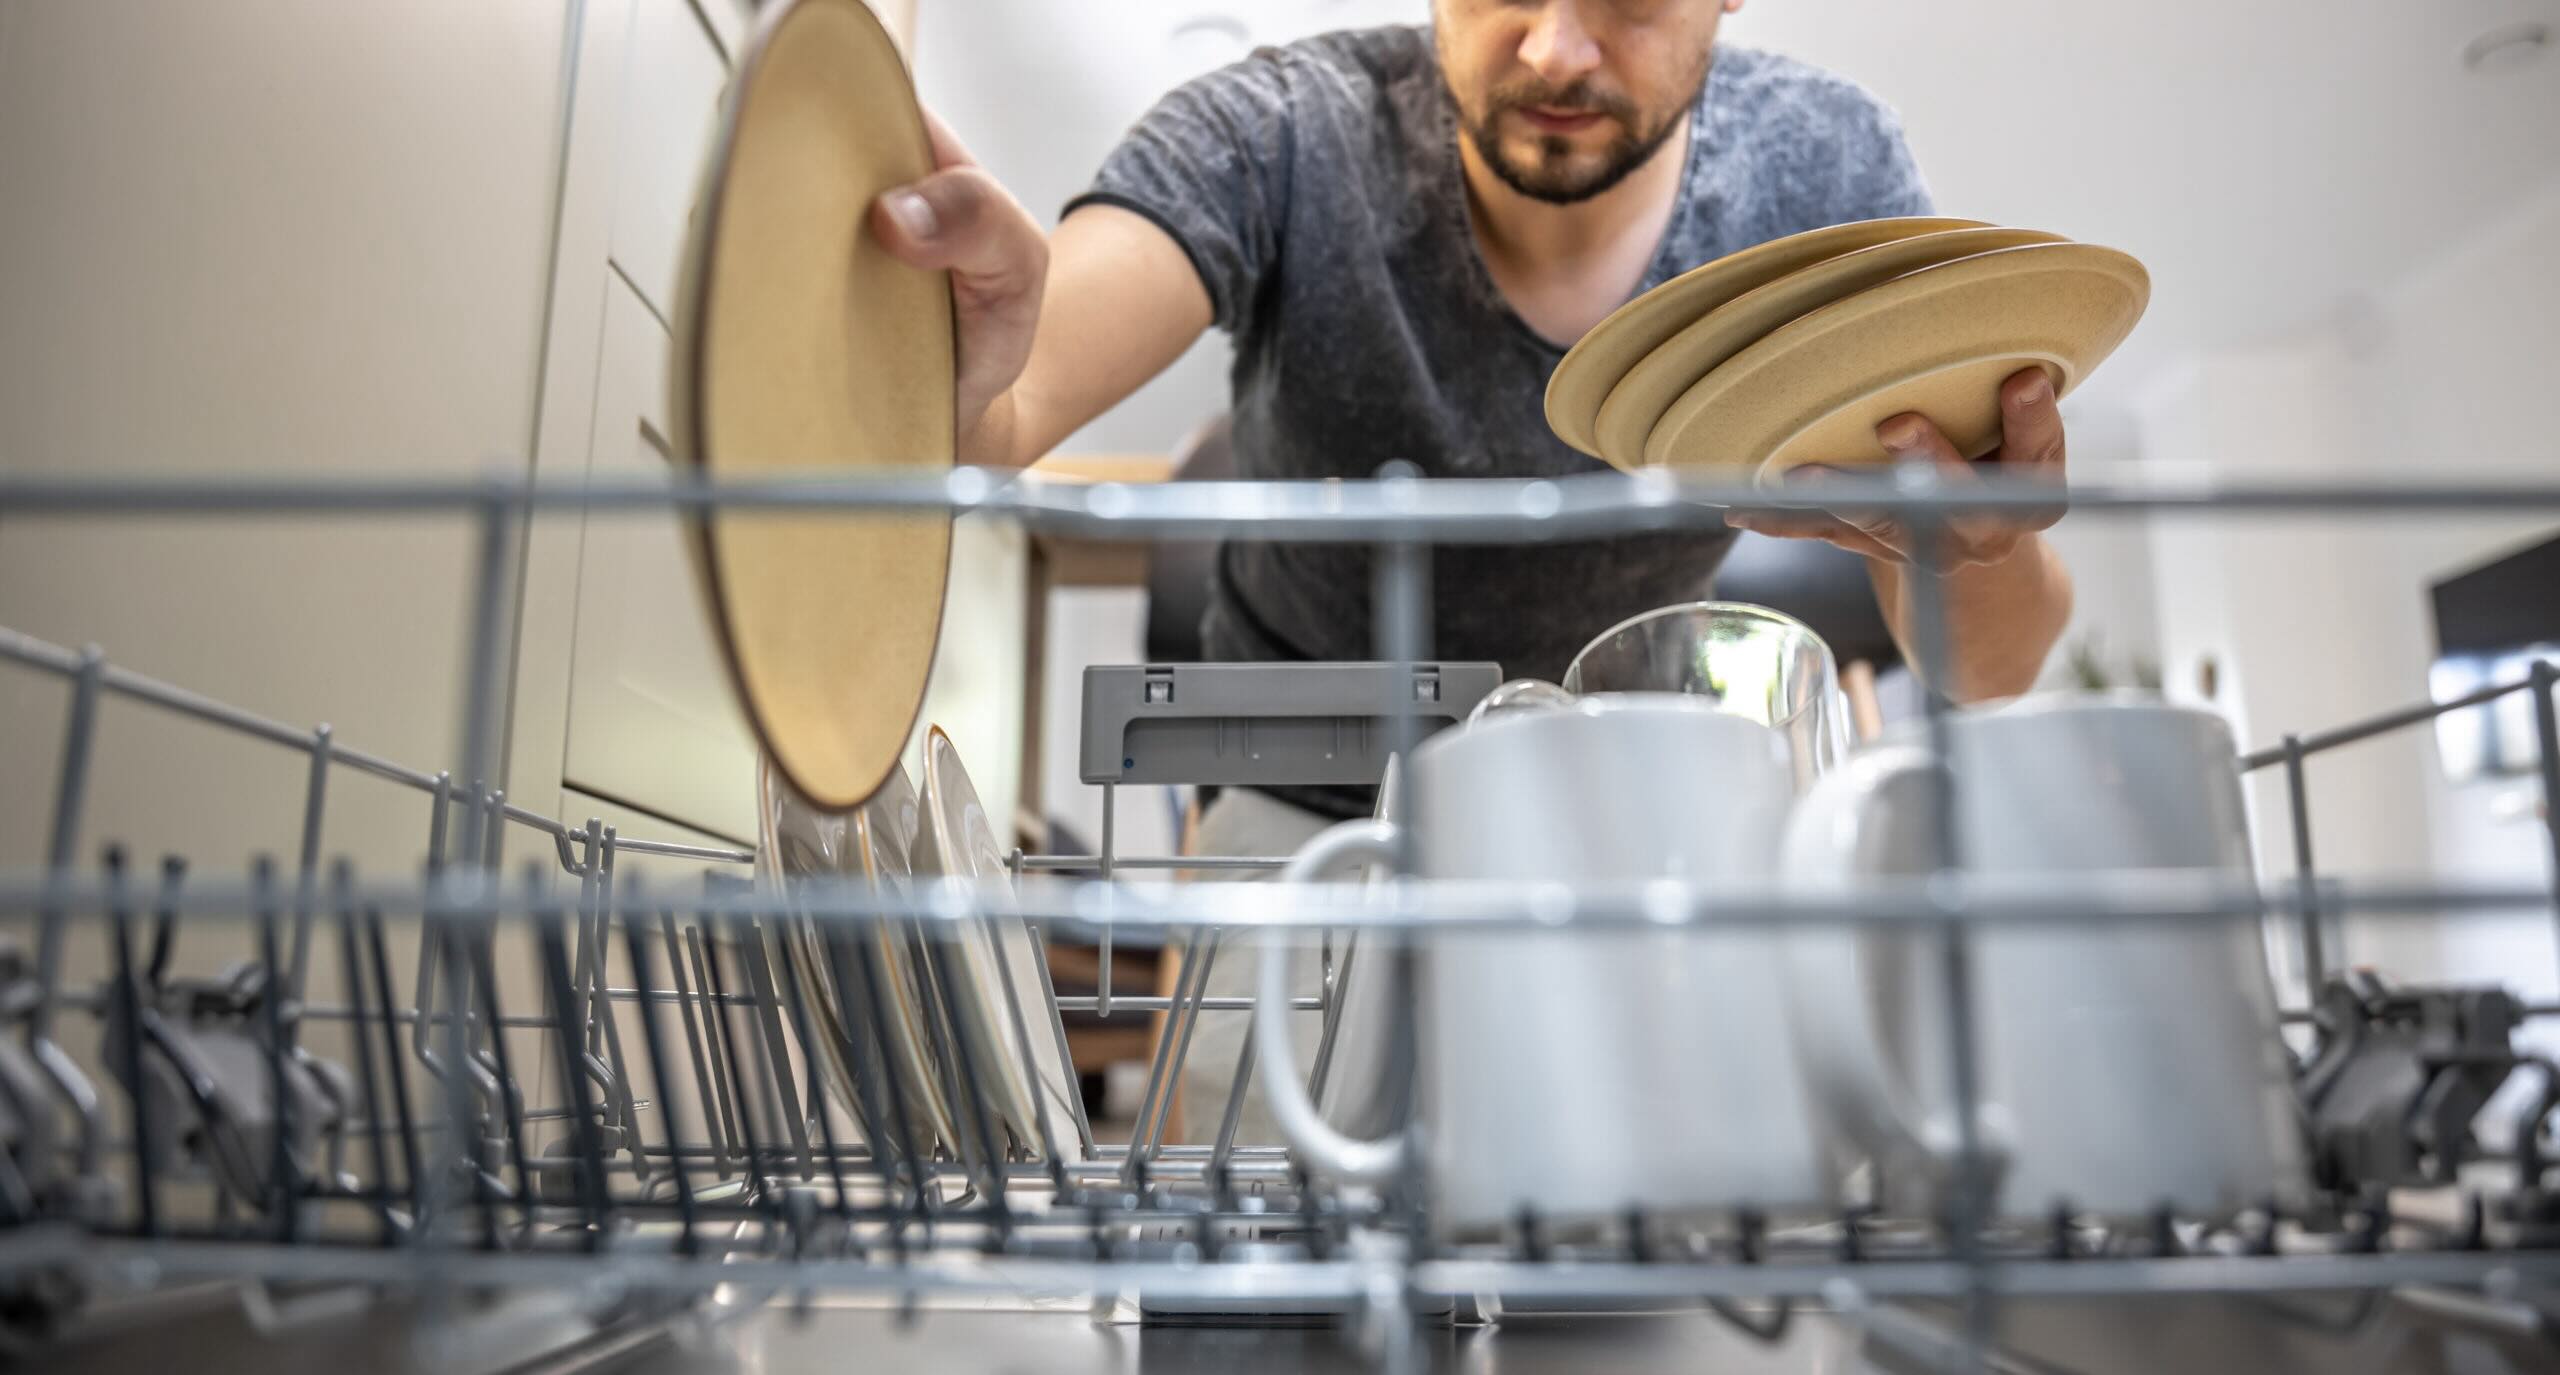 How To Fix The Error Code U7 For GE Dishwasher